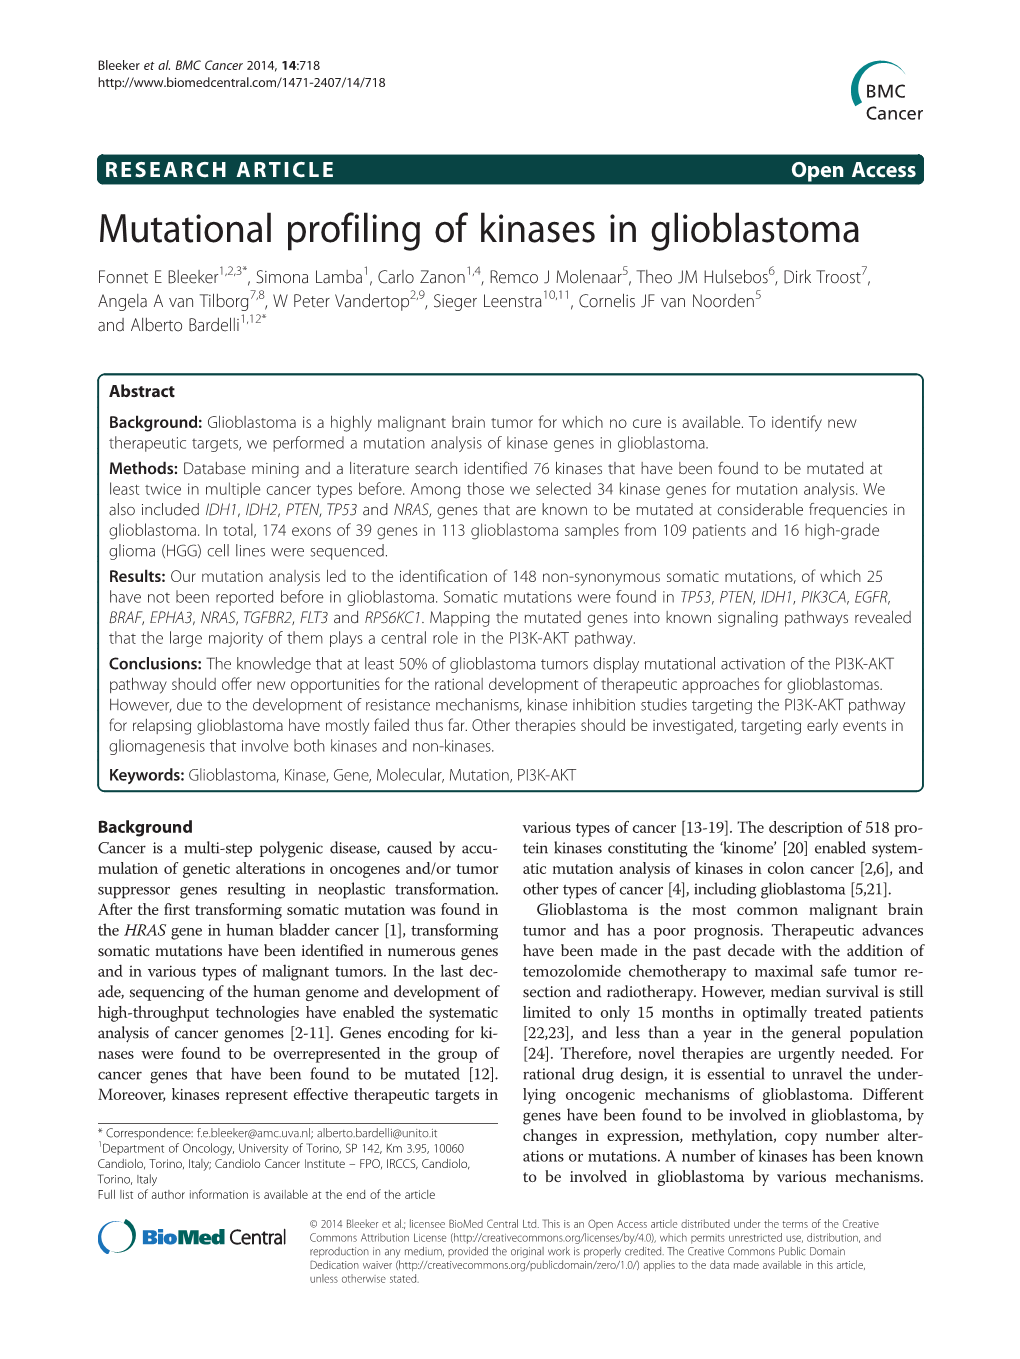 Mutational Profiling of Kinases in Glioblastoma